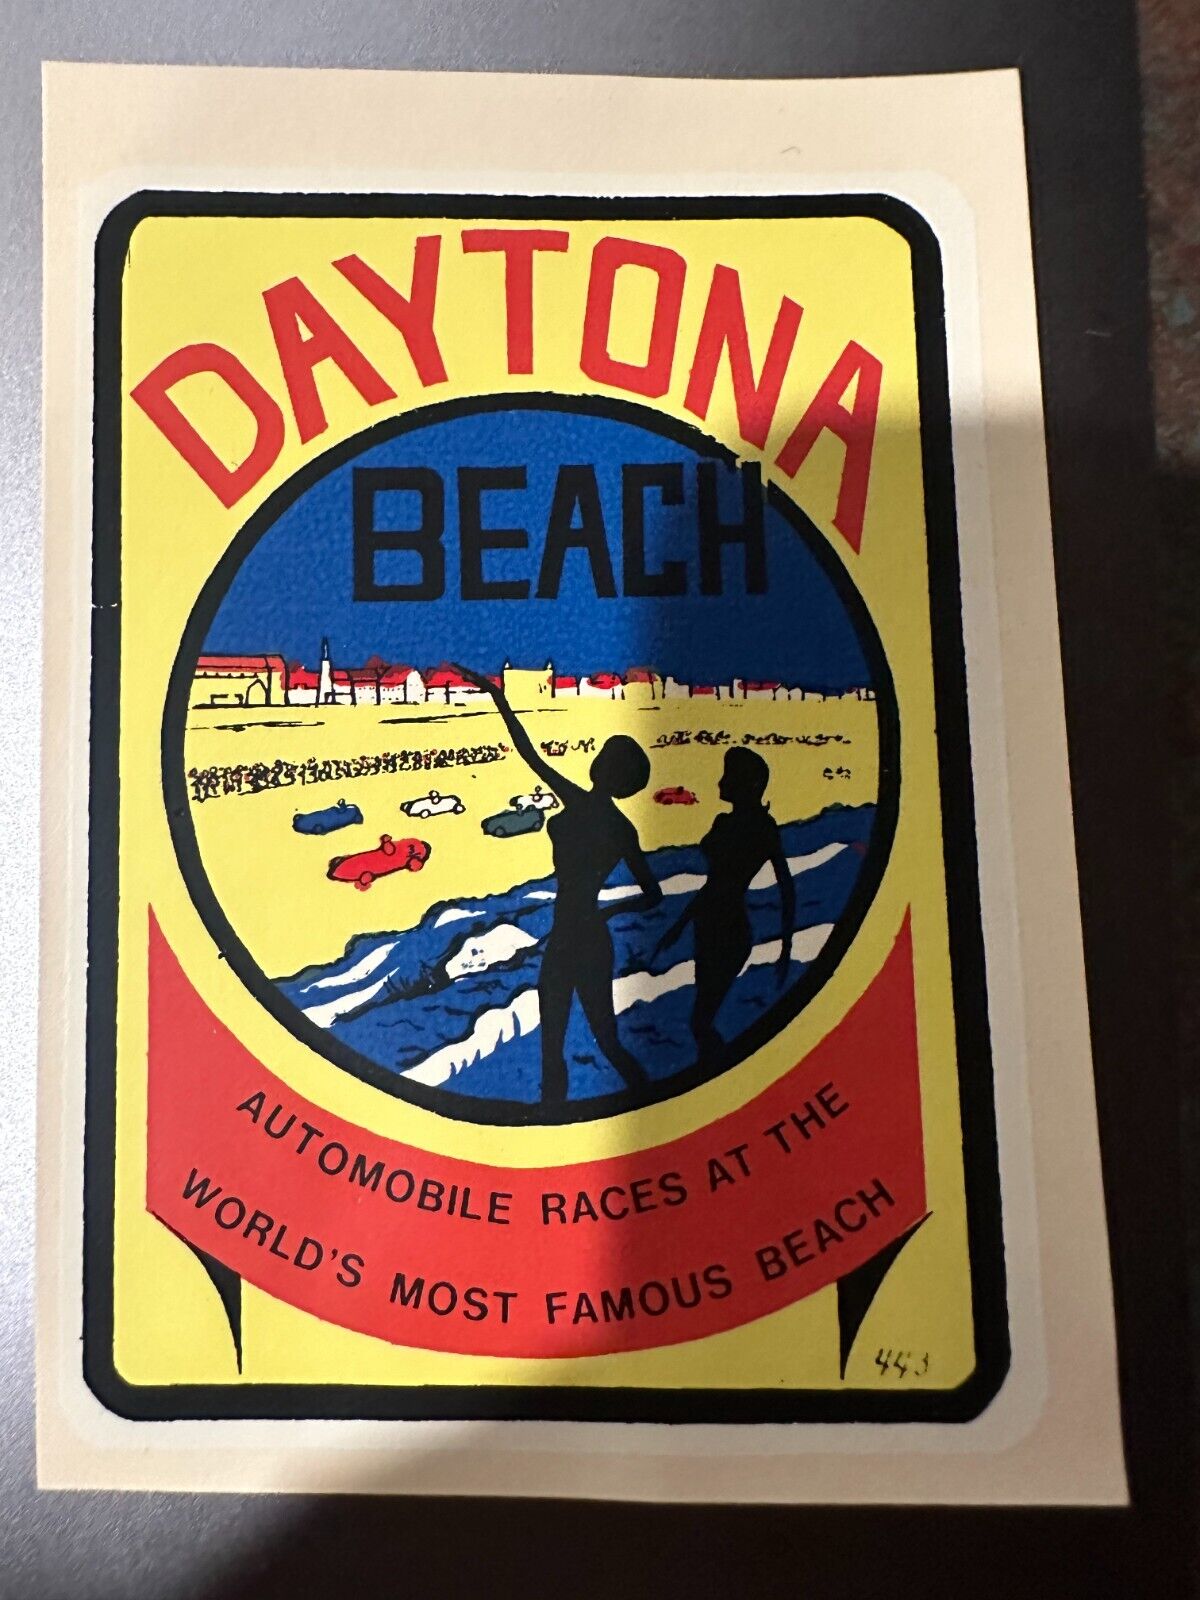 Vintage Baxter Lane Daytona Beach Decal, Near Mint Condition (60s)